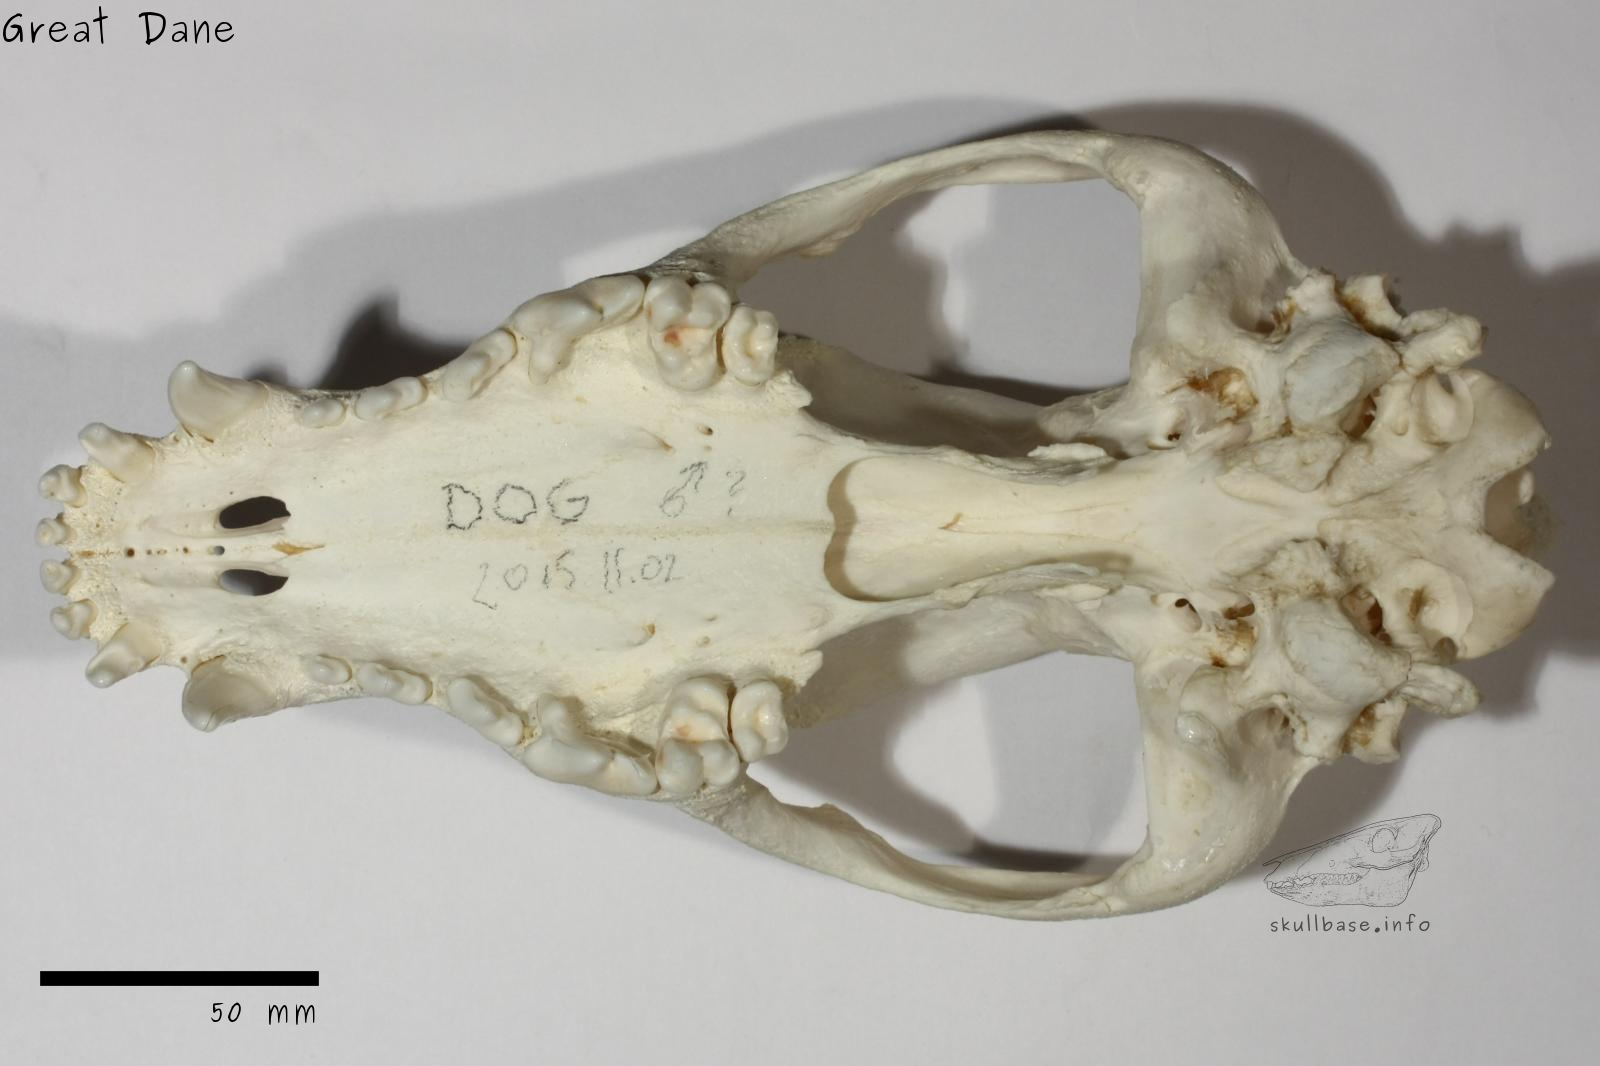 Great Dane (Canis lupus familiaris) skull ventral view